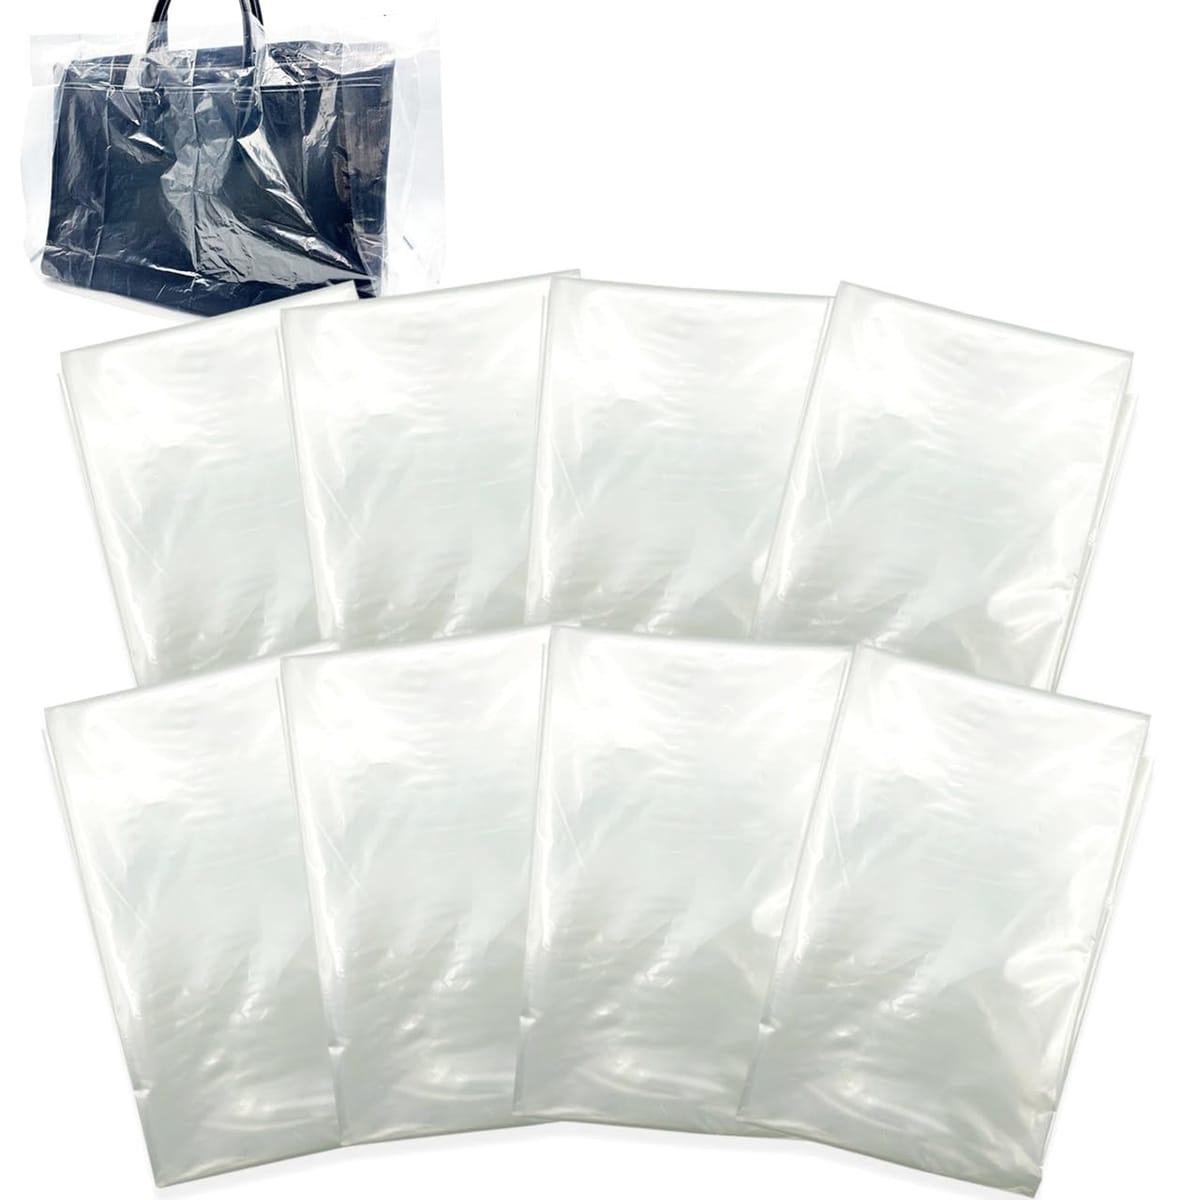 [Rimikuru] レインバッグカバー 防水 透明 4枚/8枚 鞄 カバー バッグカバー 使い捨て 携帯用 マチ付き トート 雨 雨よけ